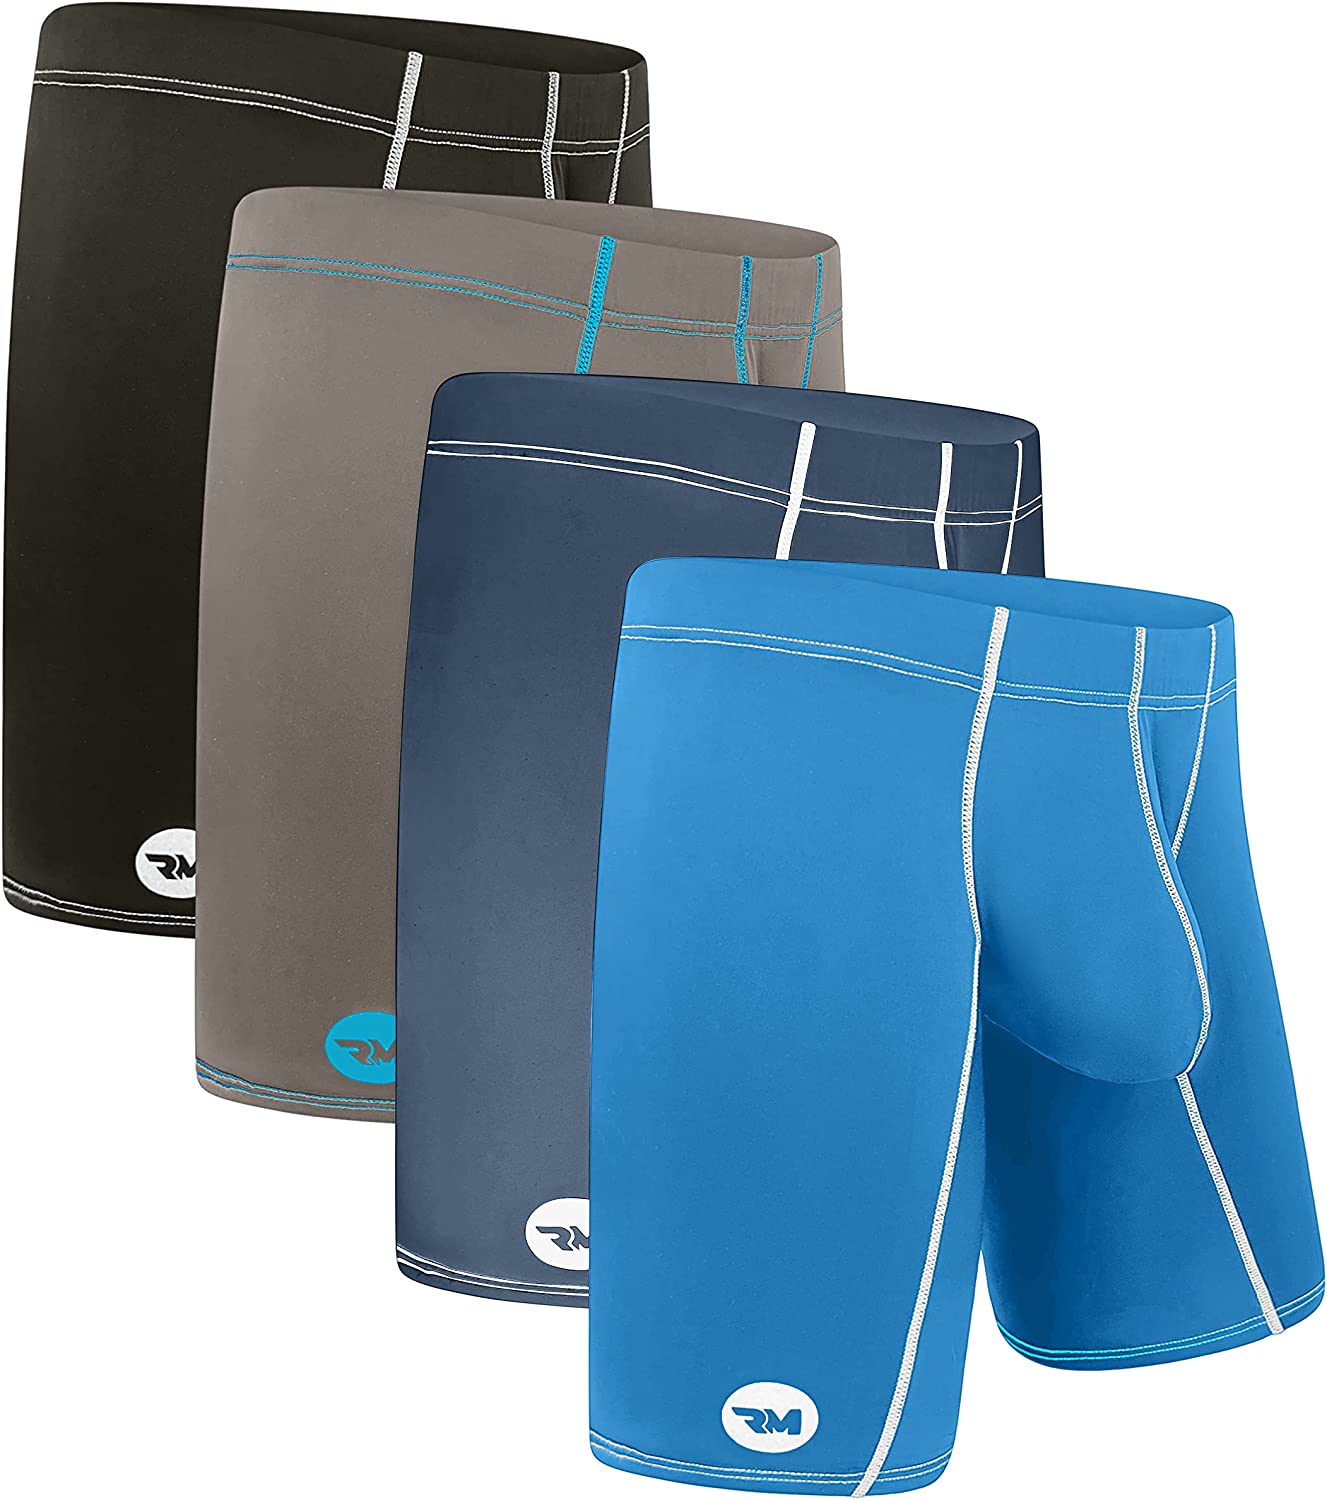 Kayakids Men's Bulge Enhancing Underwear,Quick Dry Soft Ice Silk